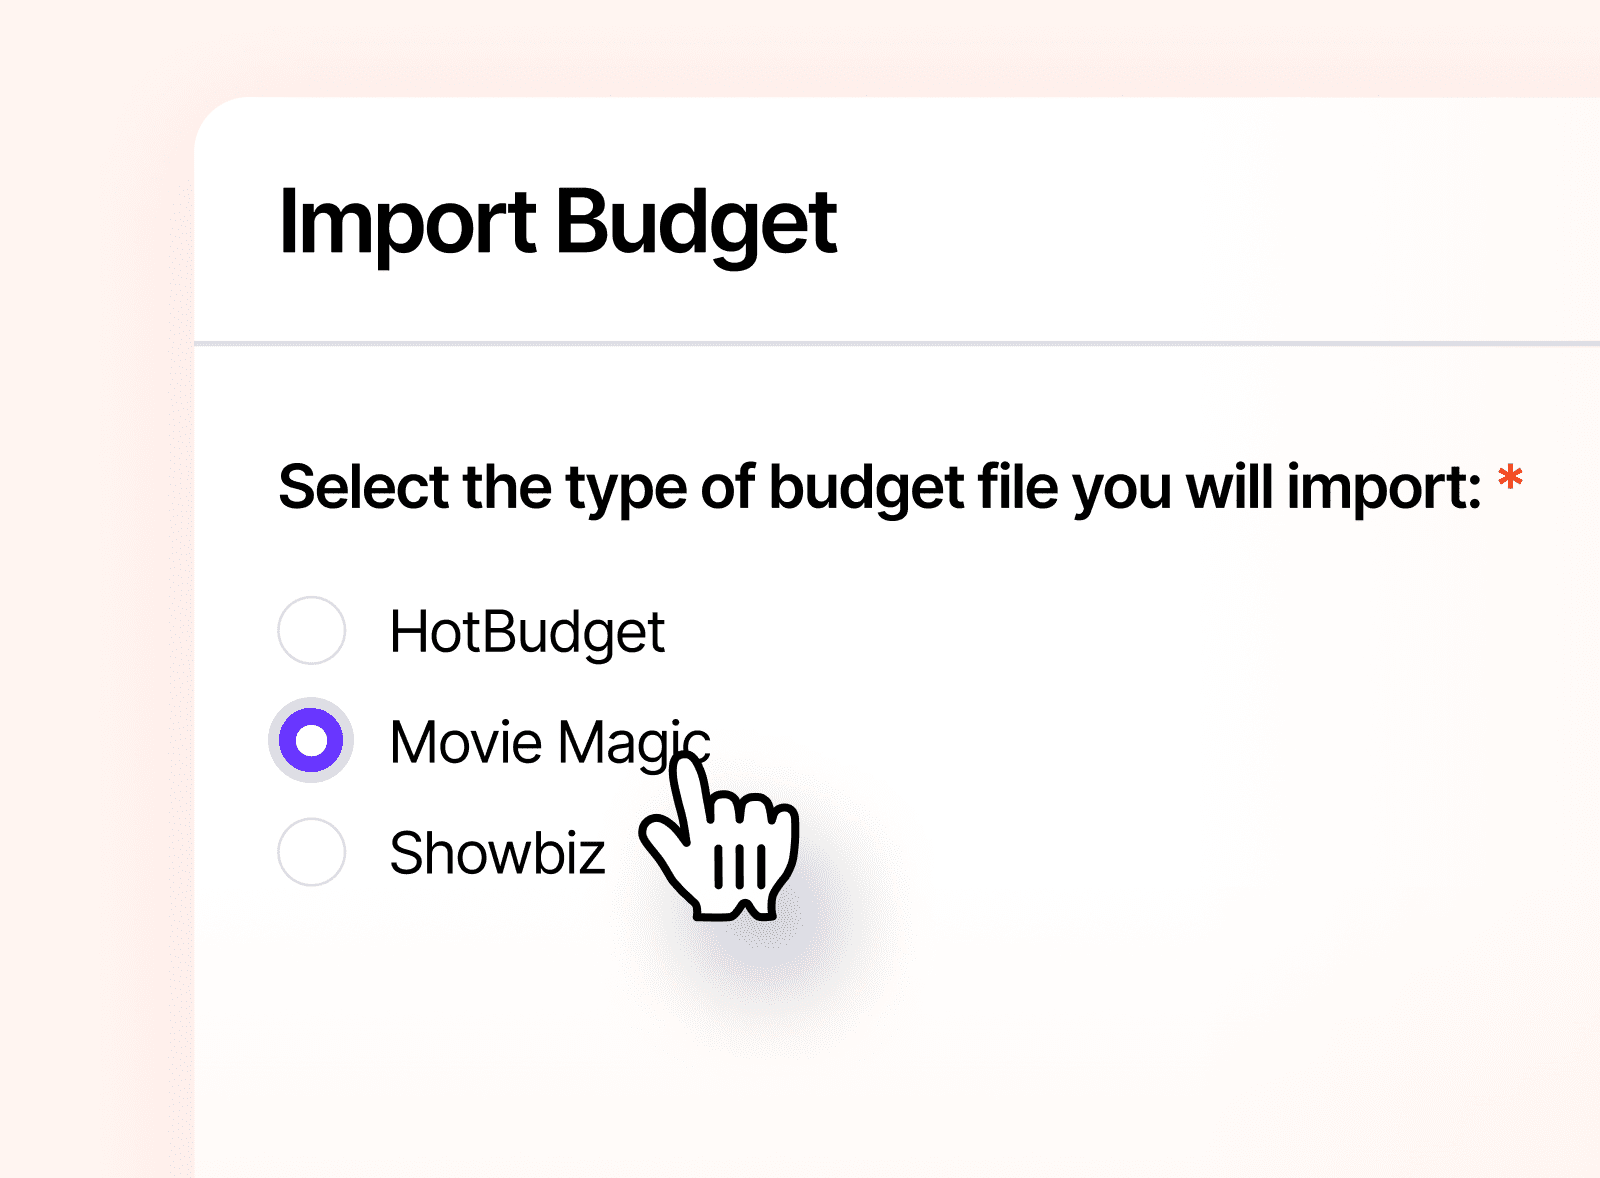 Import Budgets from HotBudget, Movie Magic, or Showbiz